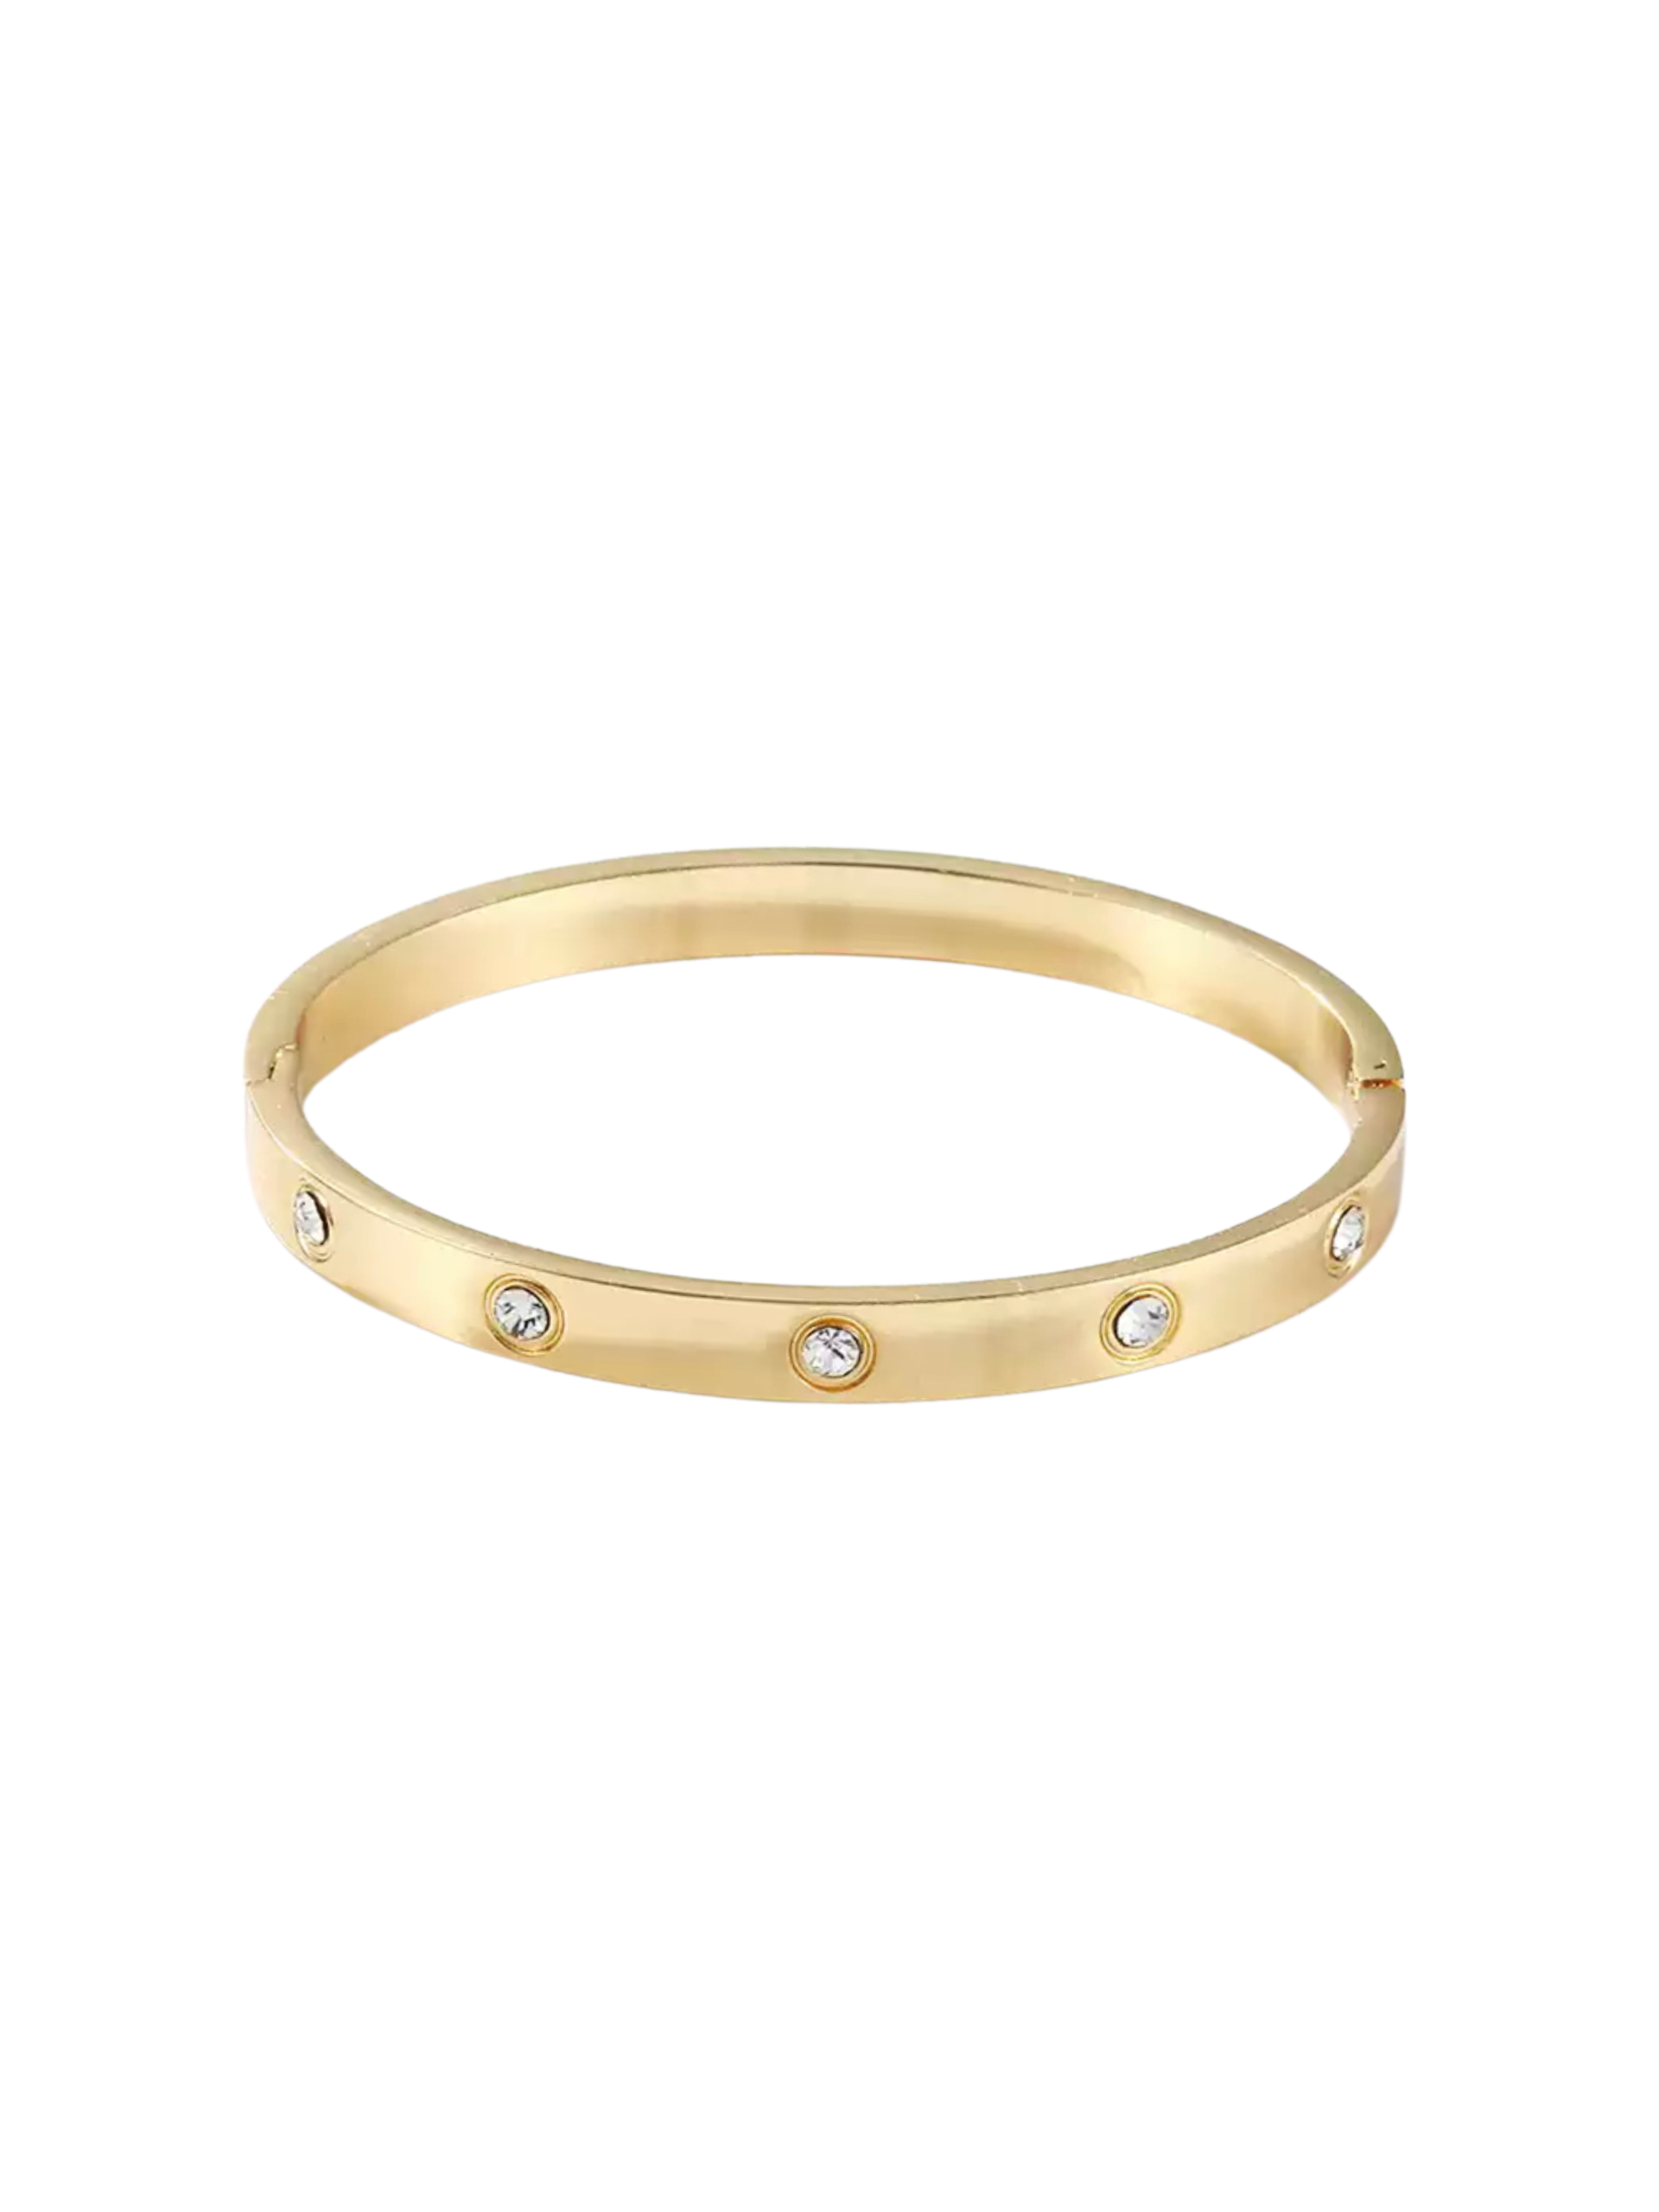 Marcel bracelet - gold